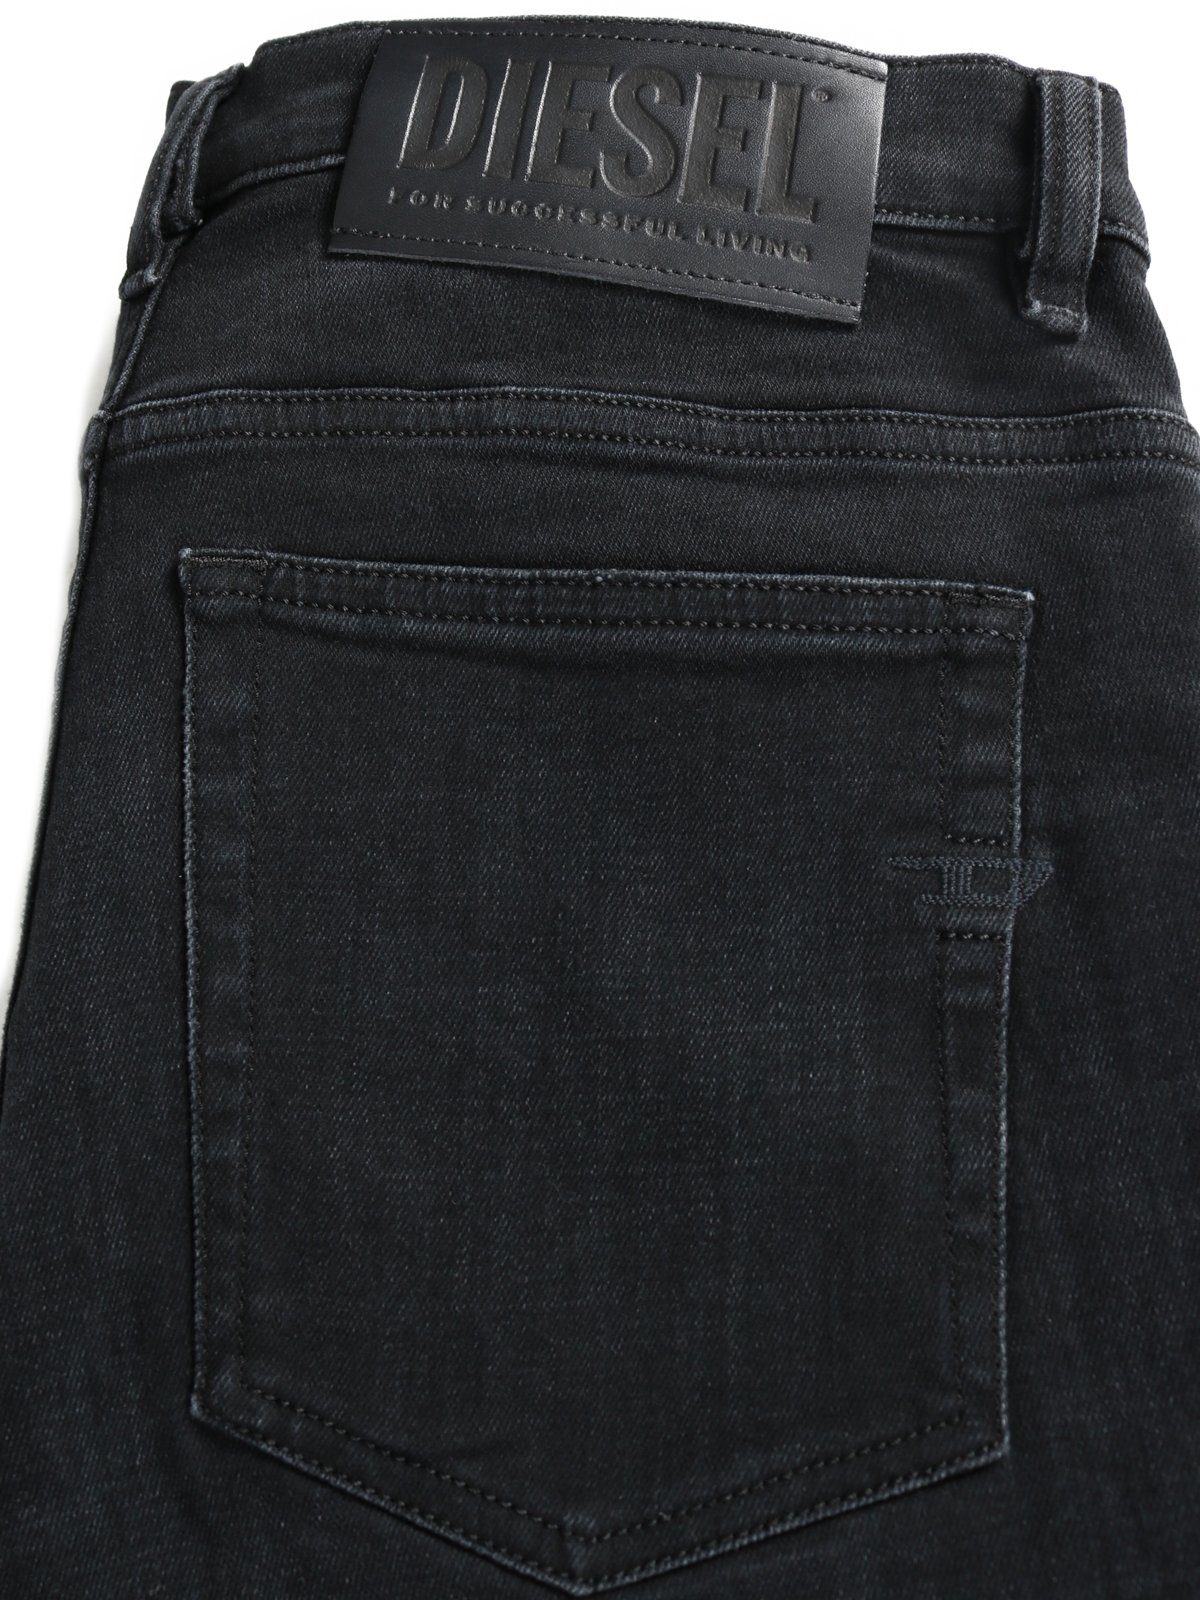 Diesel D-Amny High Waist - 09A31 Skinny-fit-Jeans Stretch Hose